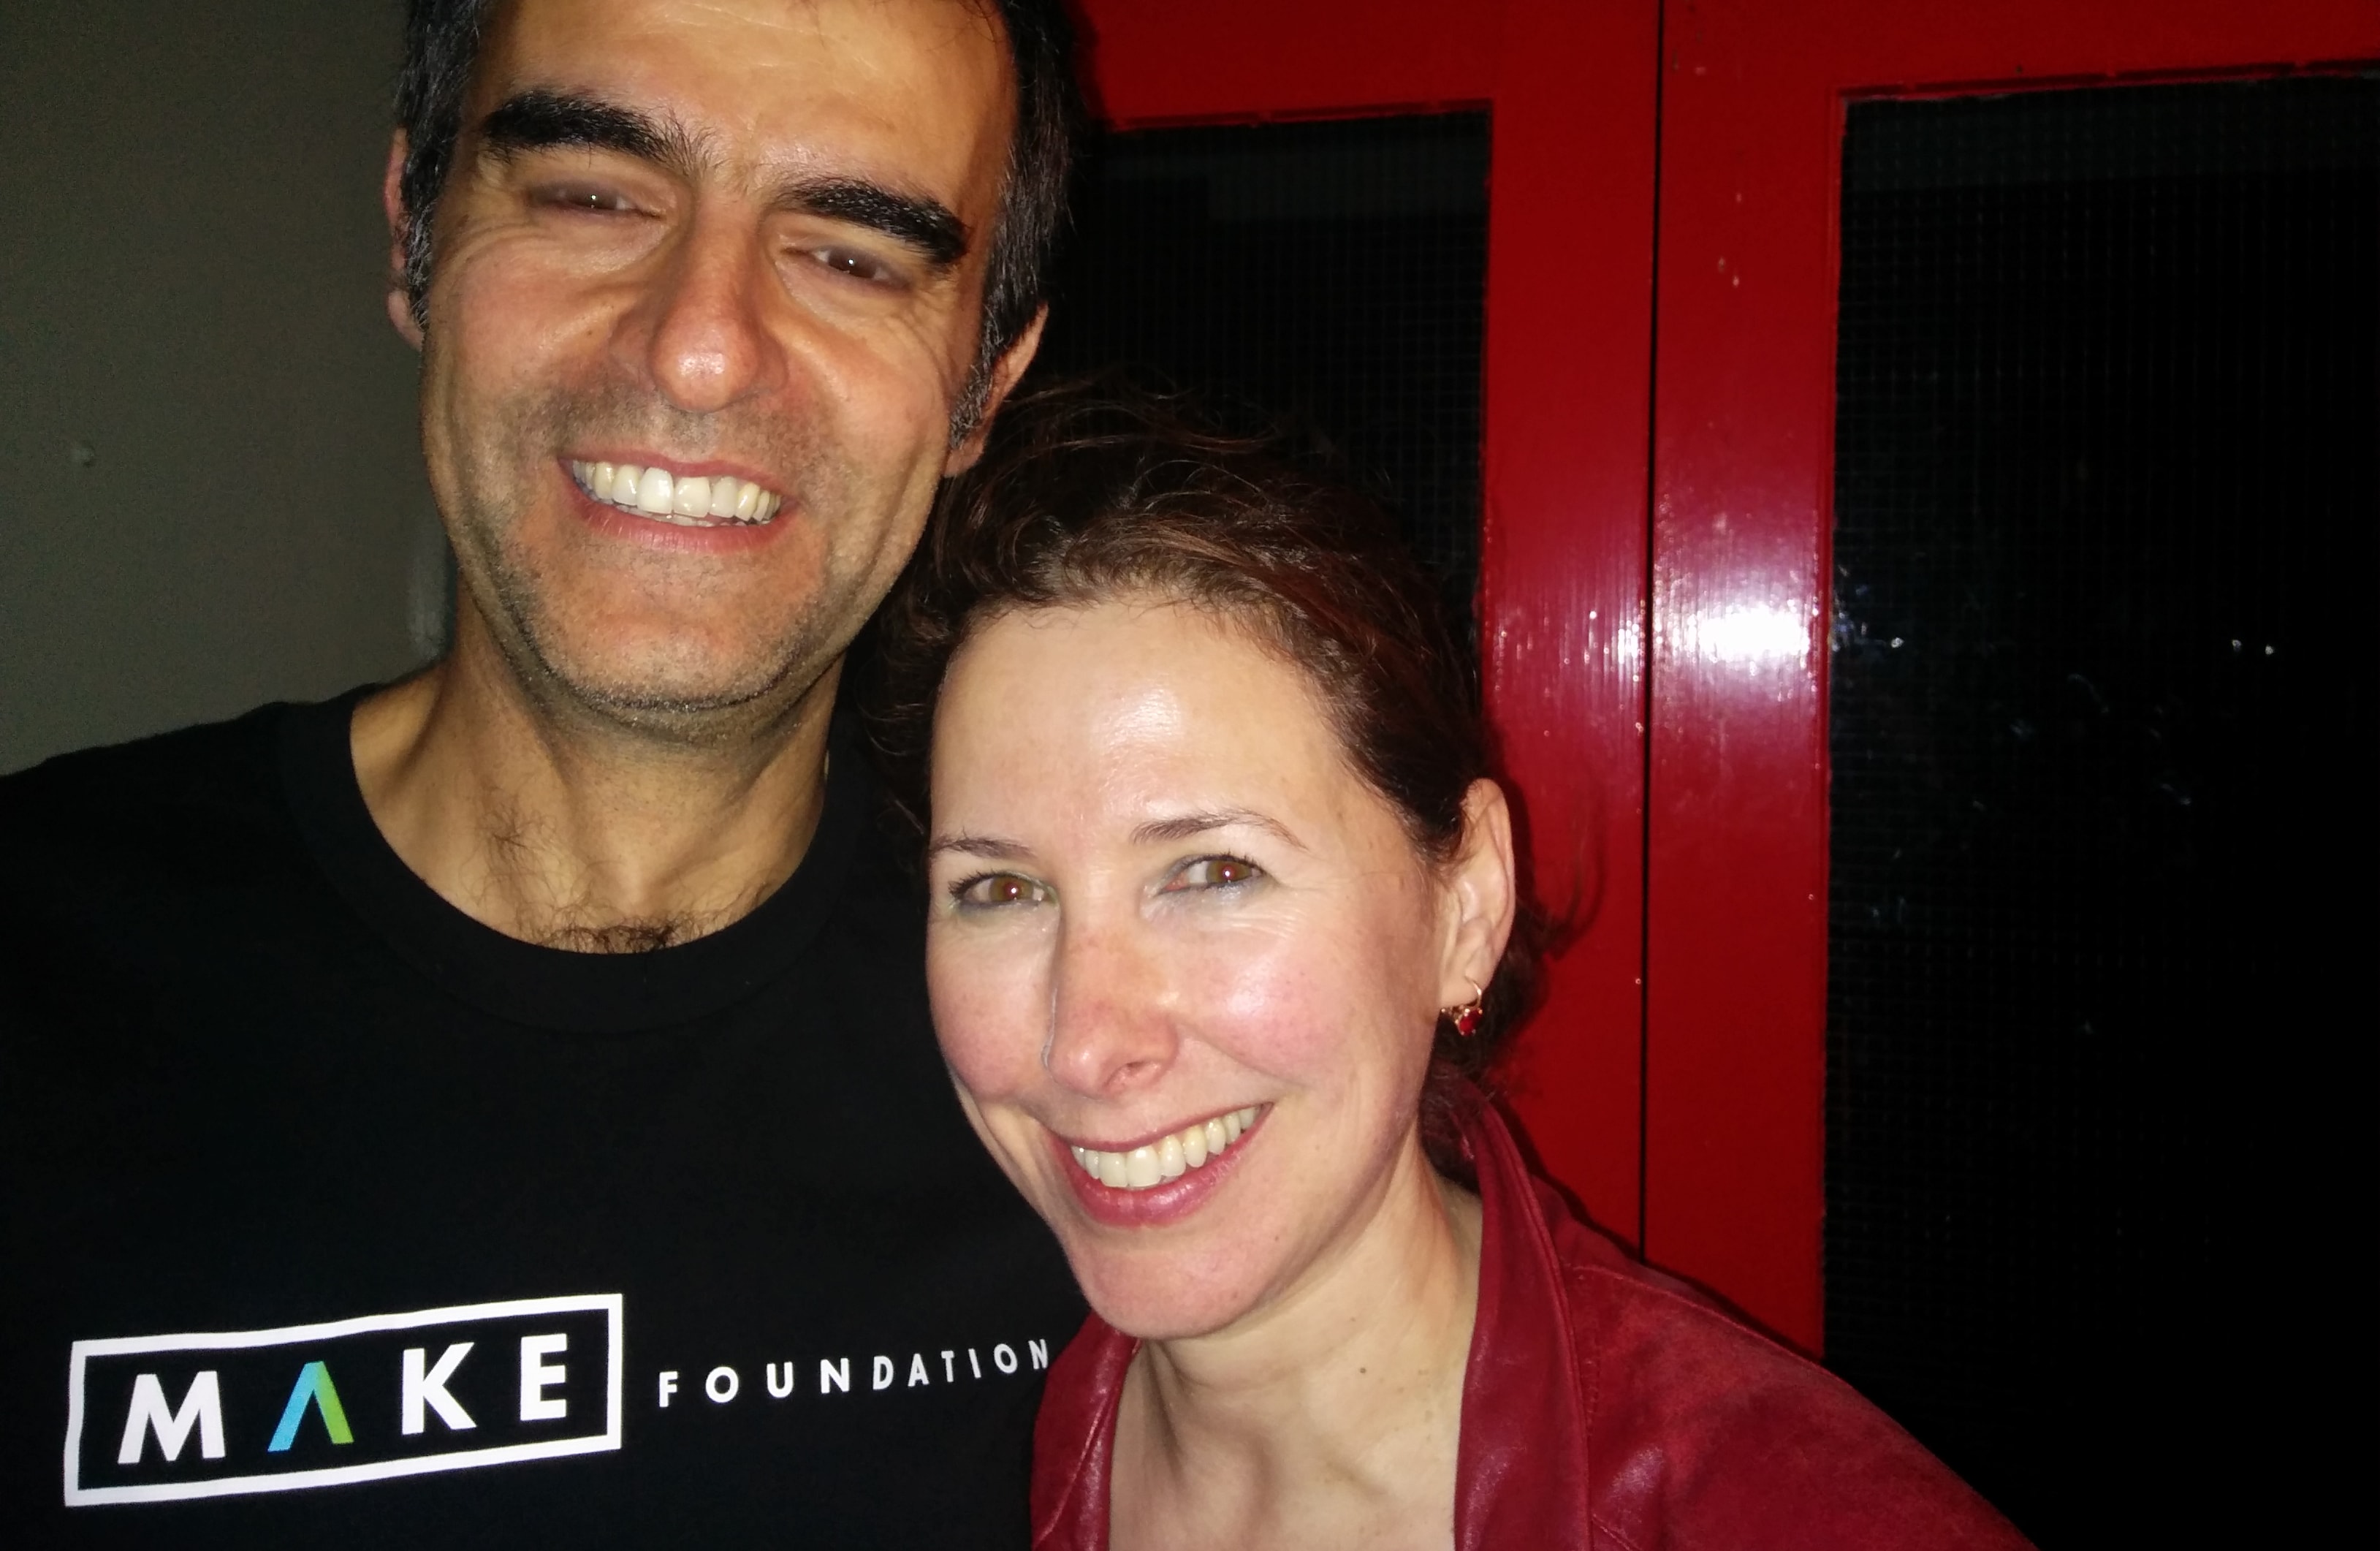 Michelle Carlile-Alkhouri and Michel Alkhouri founders of Make Foundation